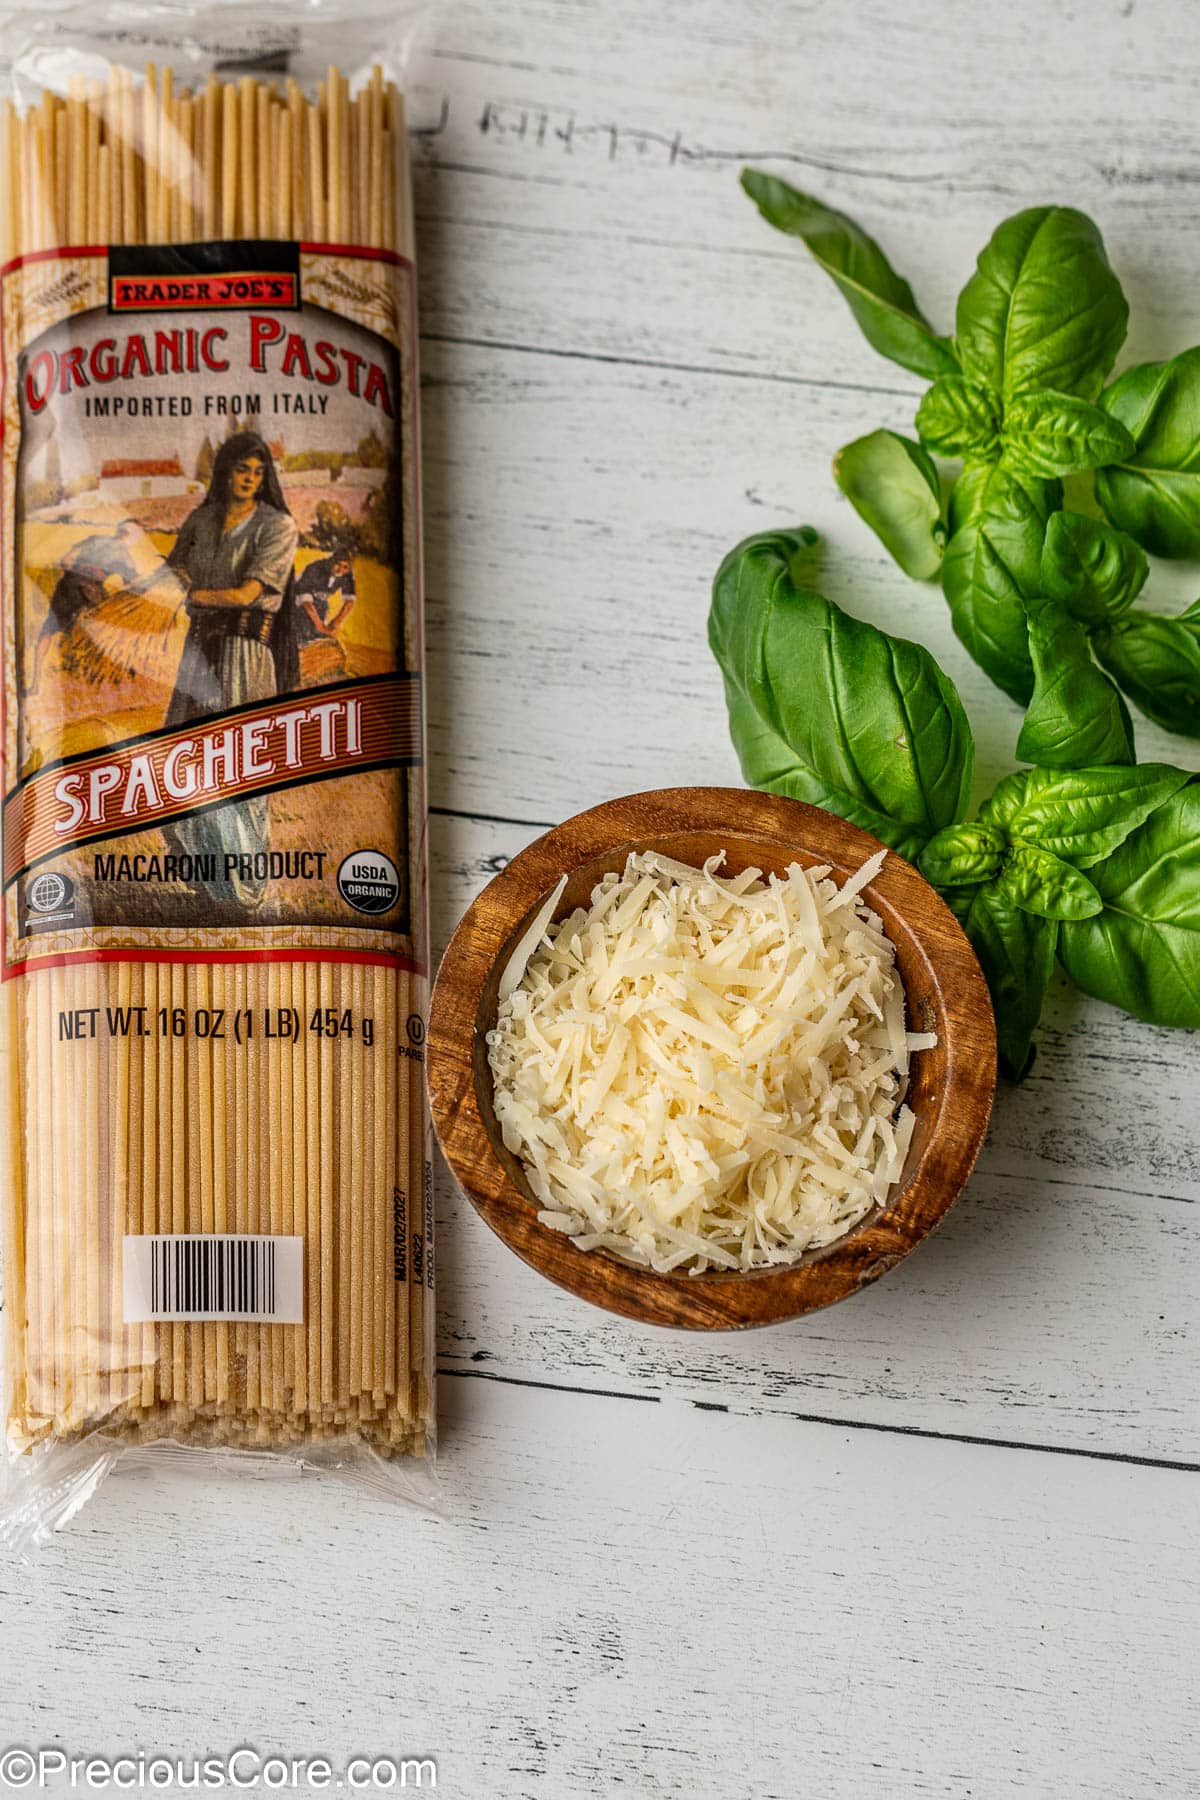 Spaghetti, shredded parmesan cheese and basil leaves.